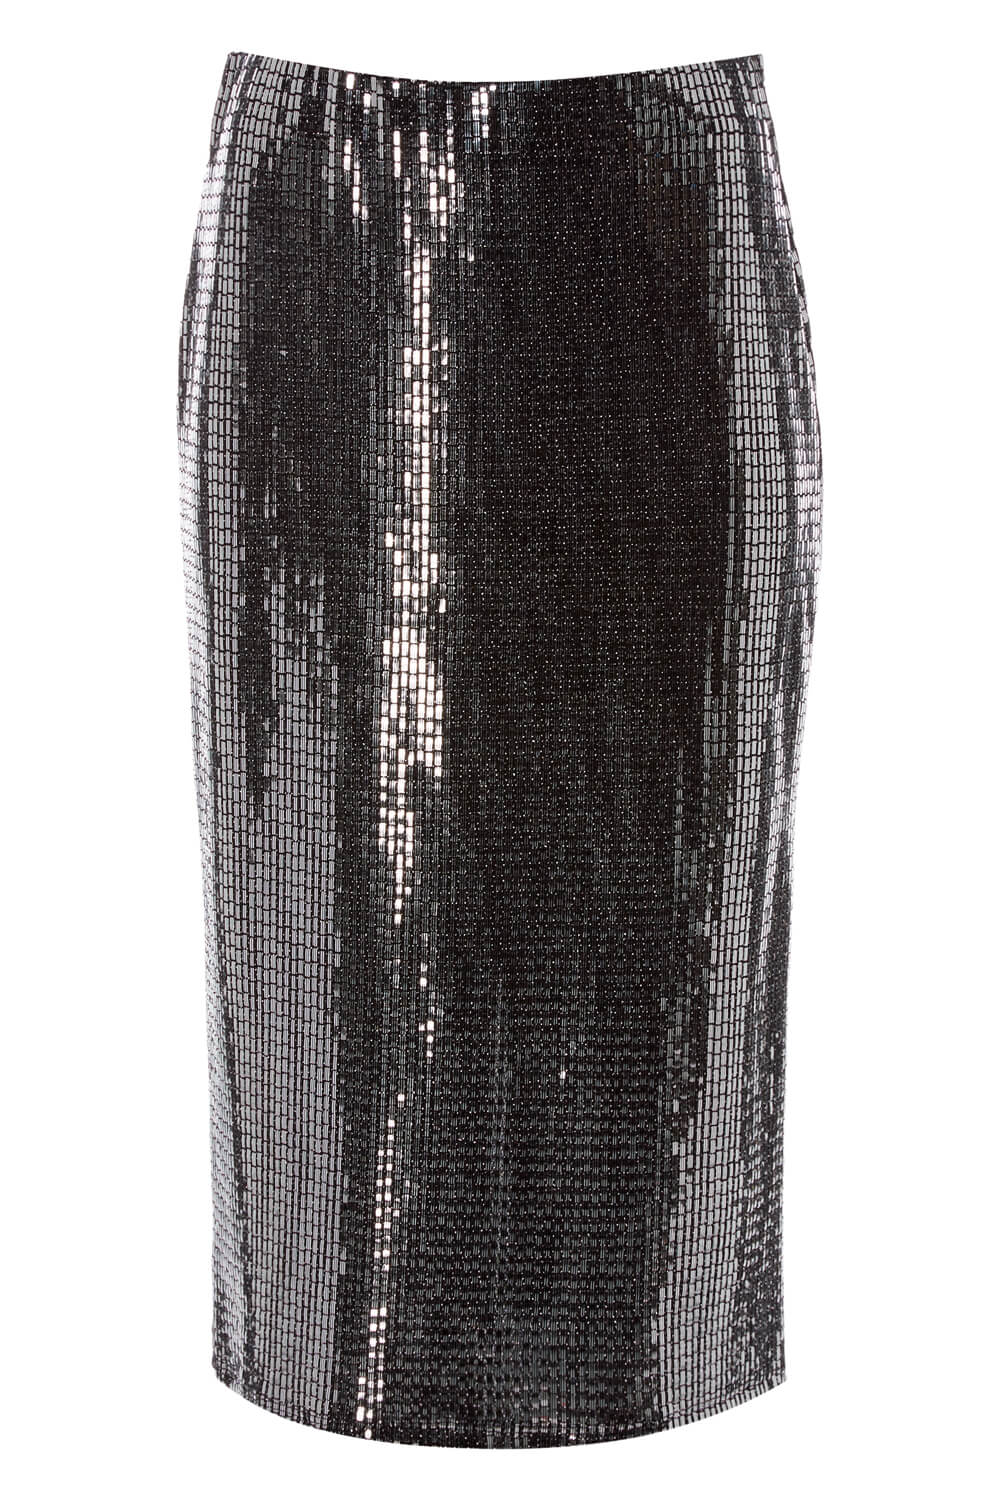 Sequin Pencil Skirt in Silver - Roman Originals UK